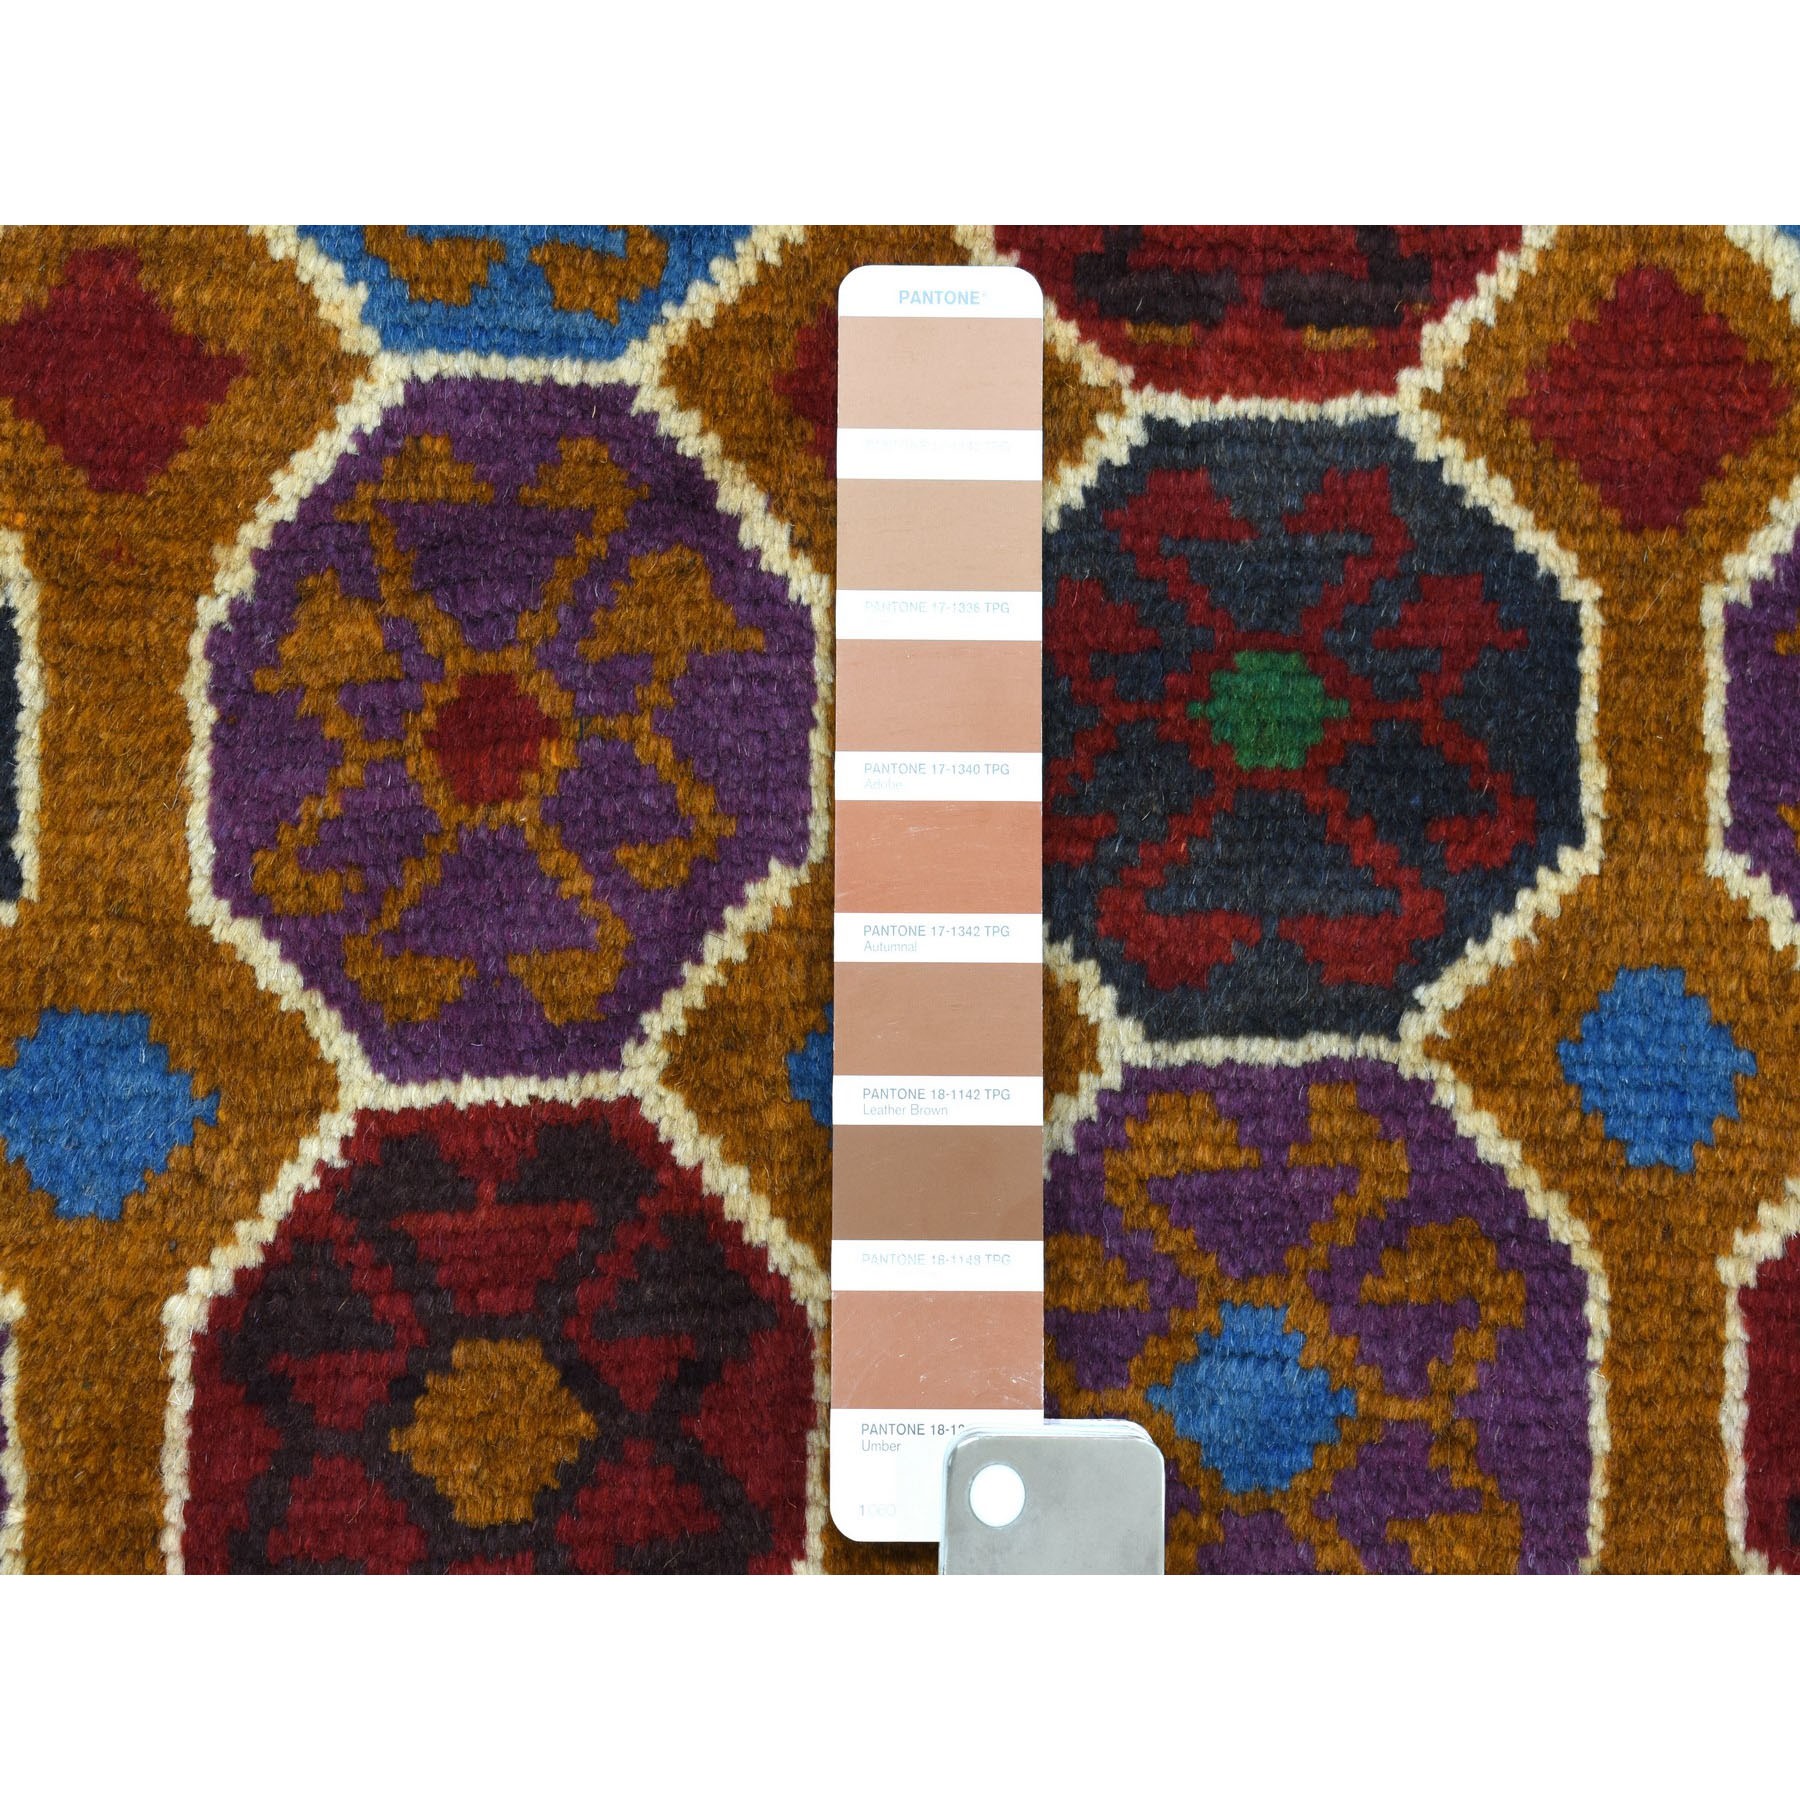 3'6"x4'9" Brown Colorful Afghan Baluch Elephant Feet Design Hand Woven 100% Wool Oriental Rug 